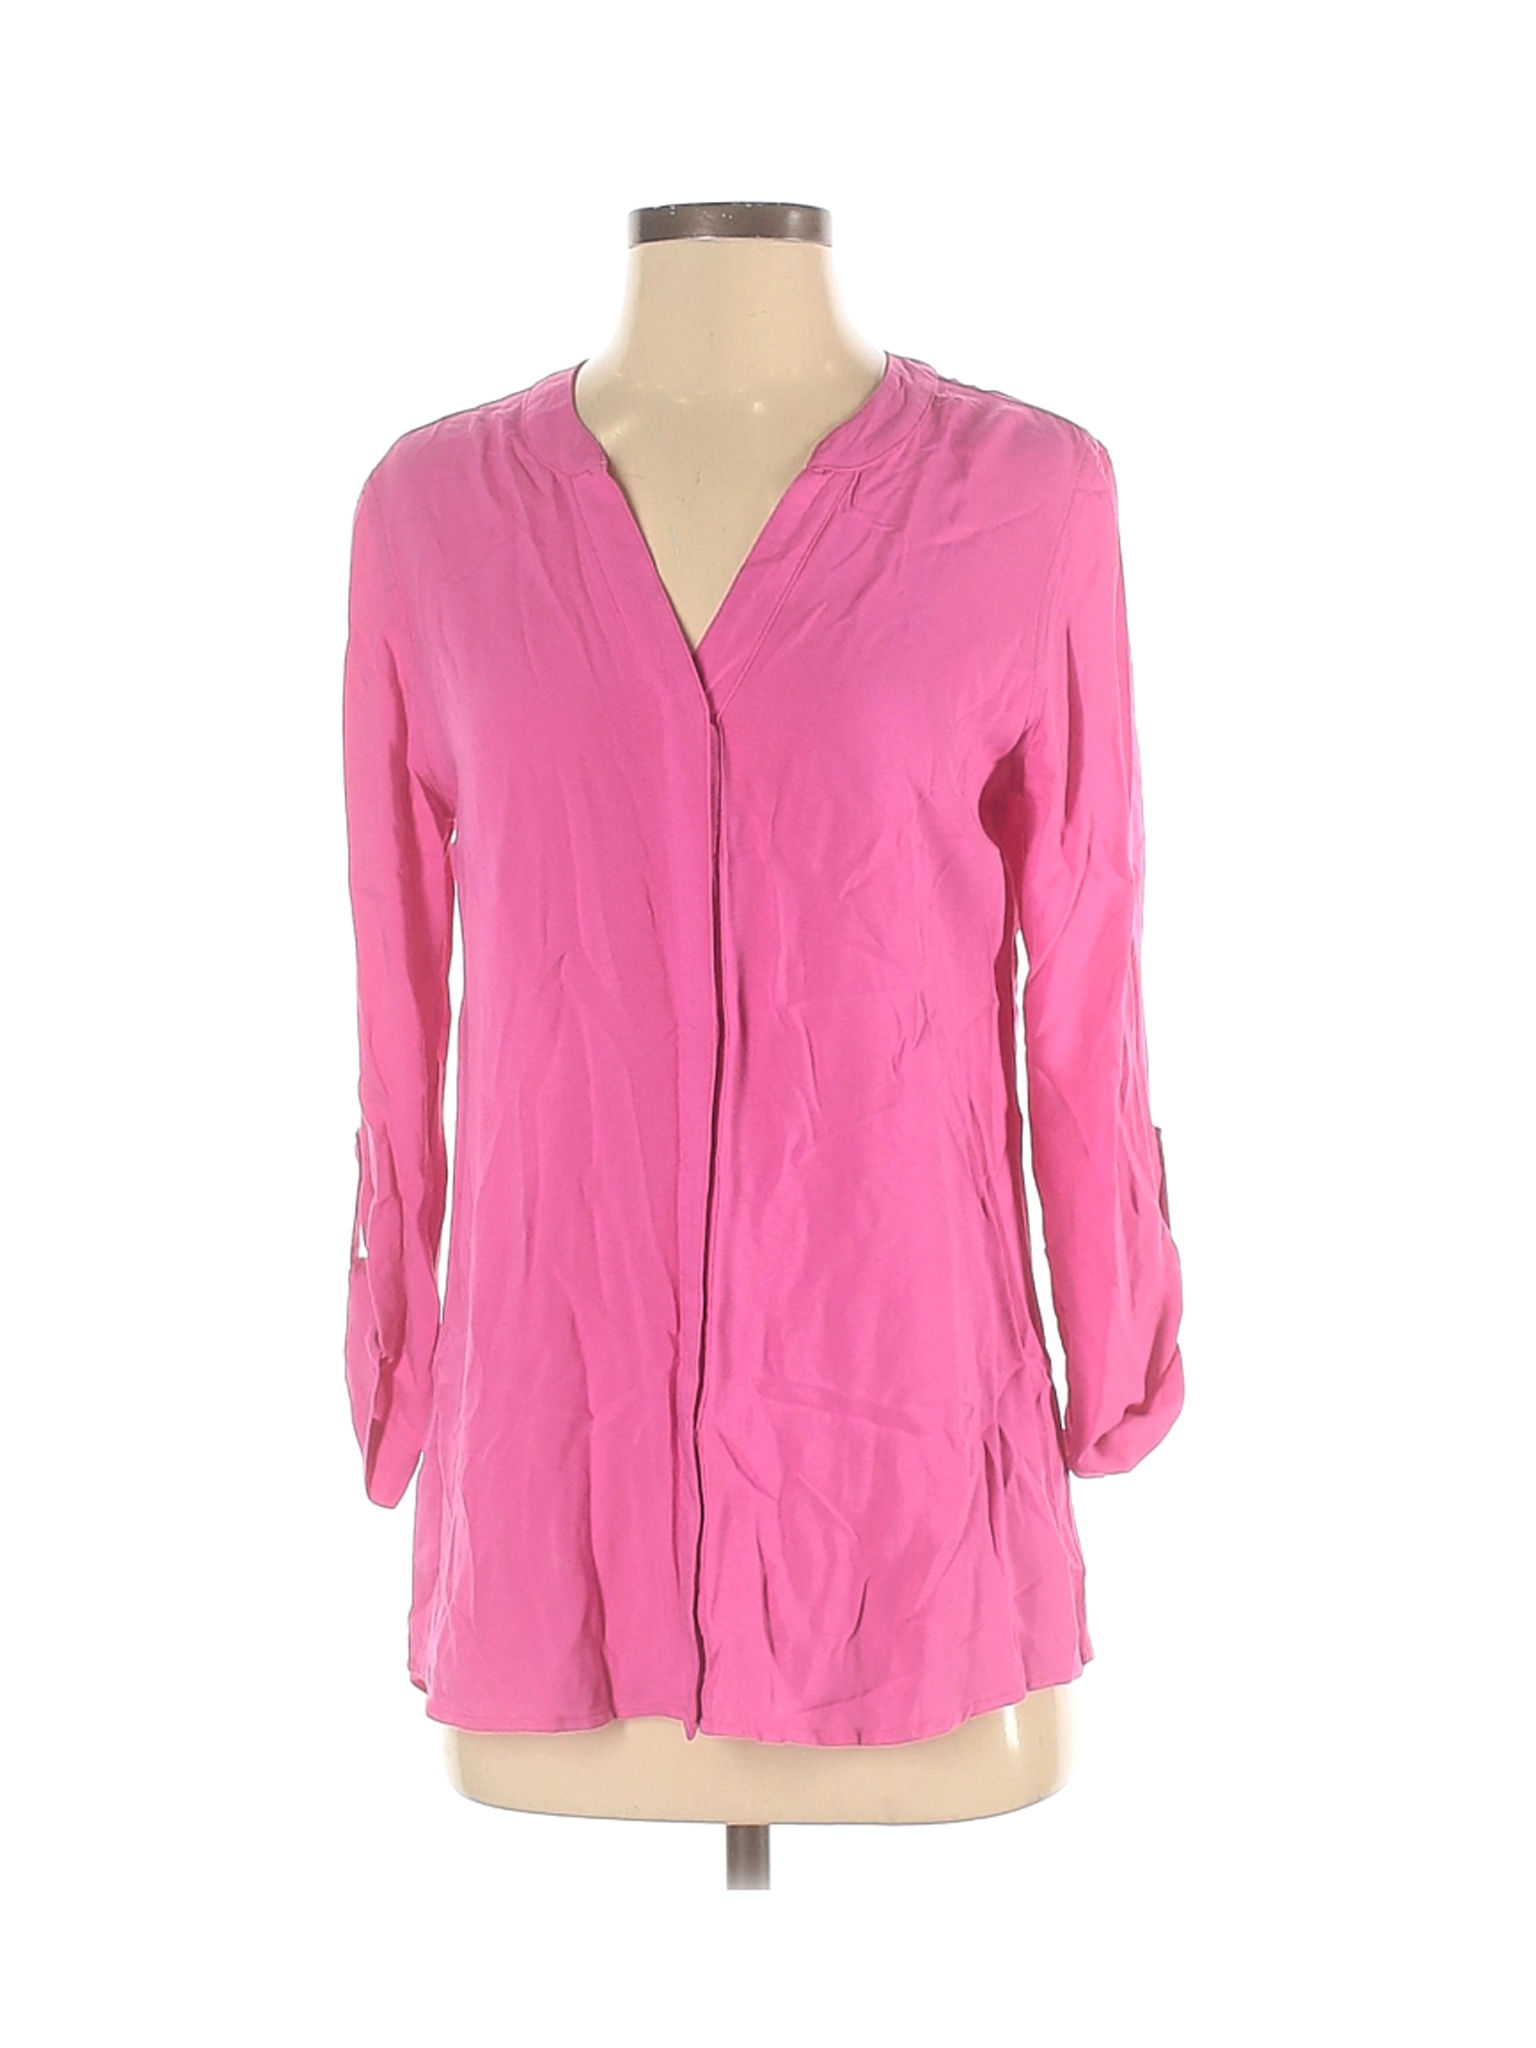 Great Northwest Indigo Women Pink 3/4 Sleeve Blouse S | eBay